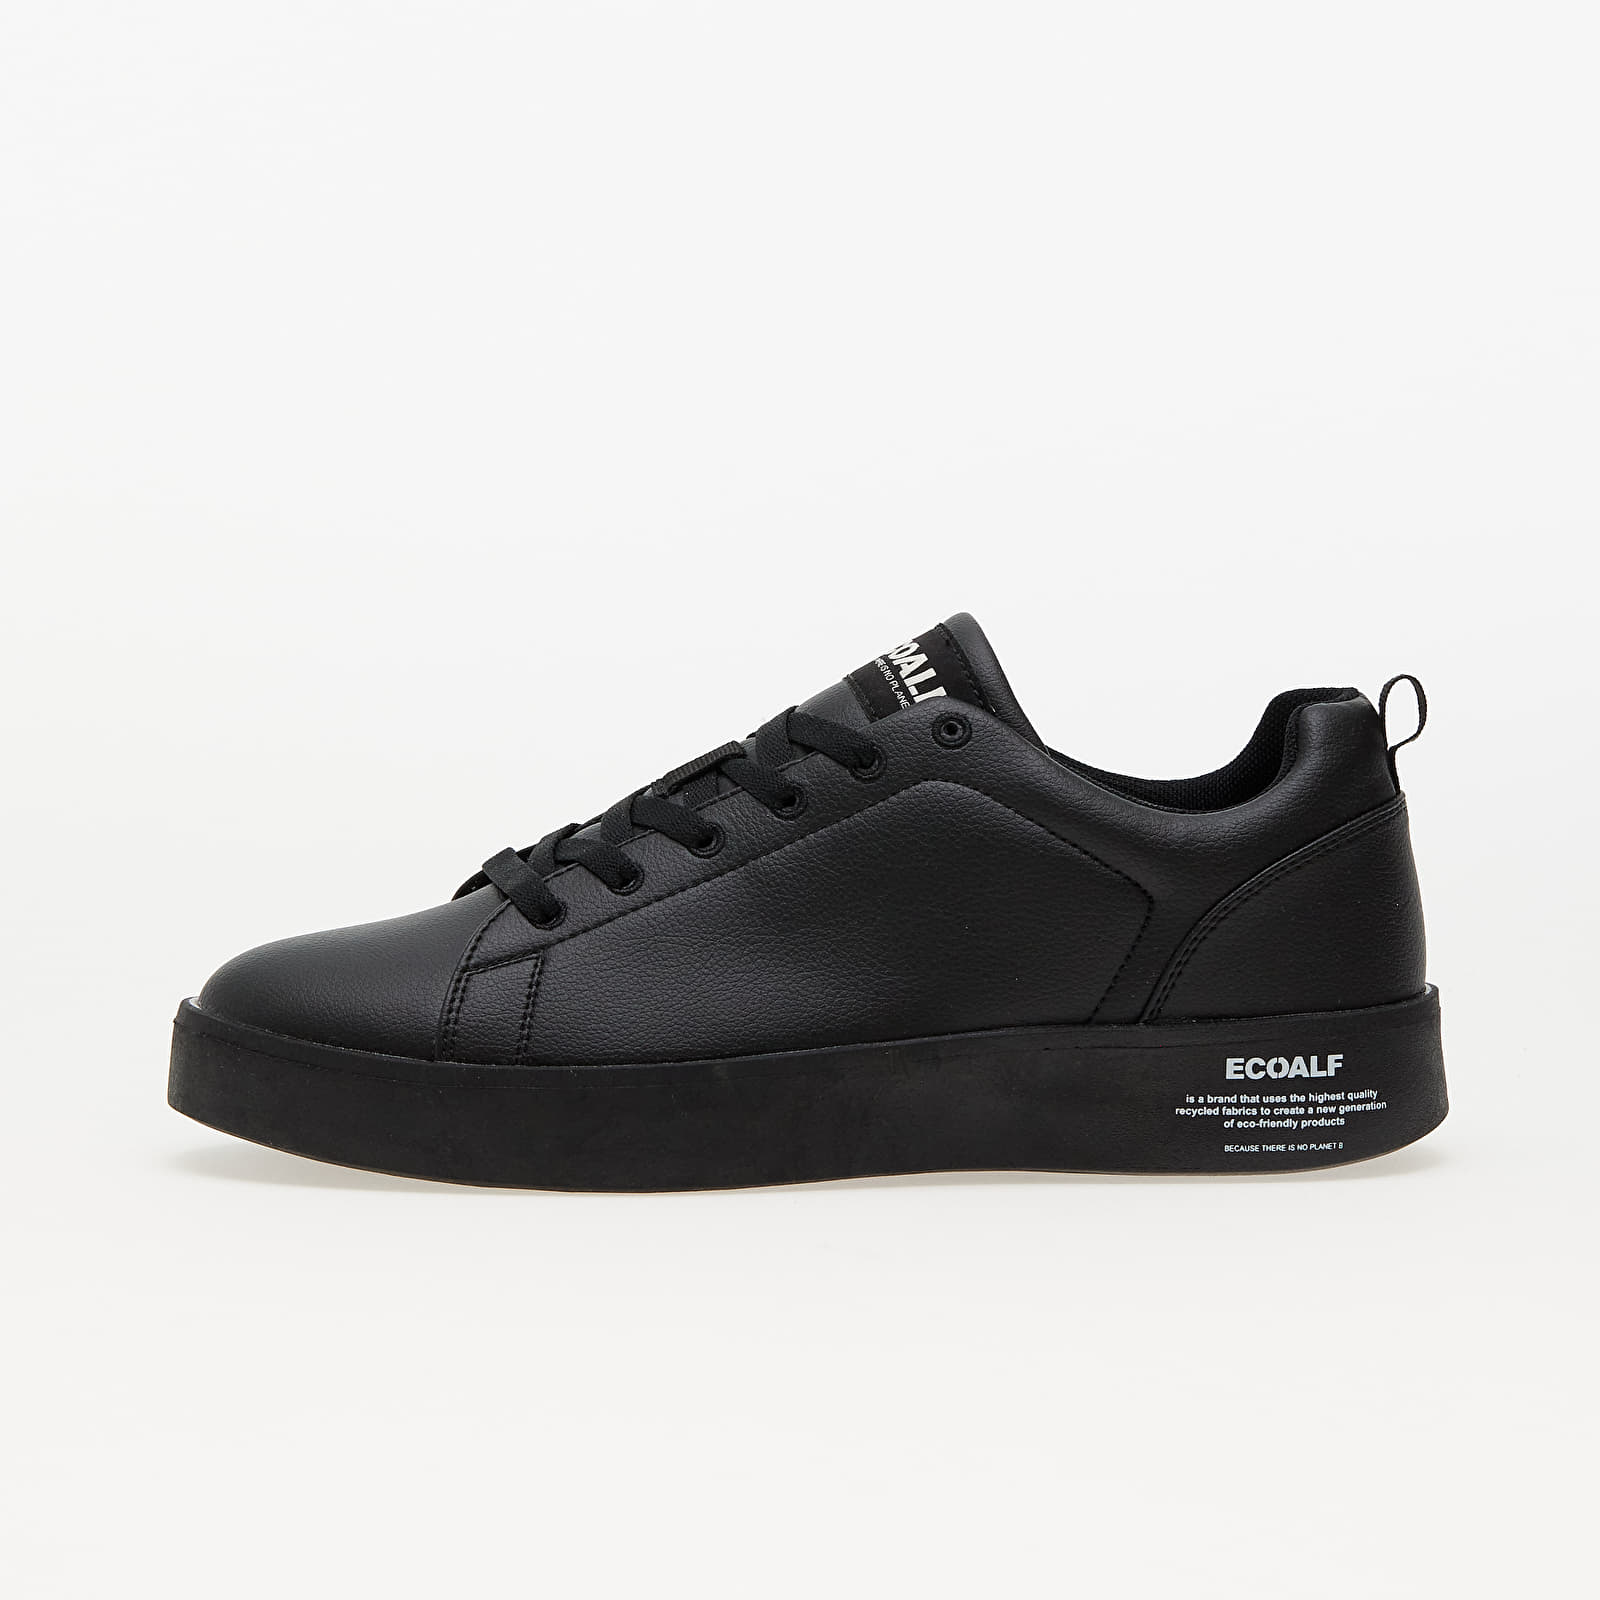 Turnschuhe und Schuhe für Männer Ecoalf Elioalf Grape Sneakers black